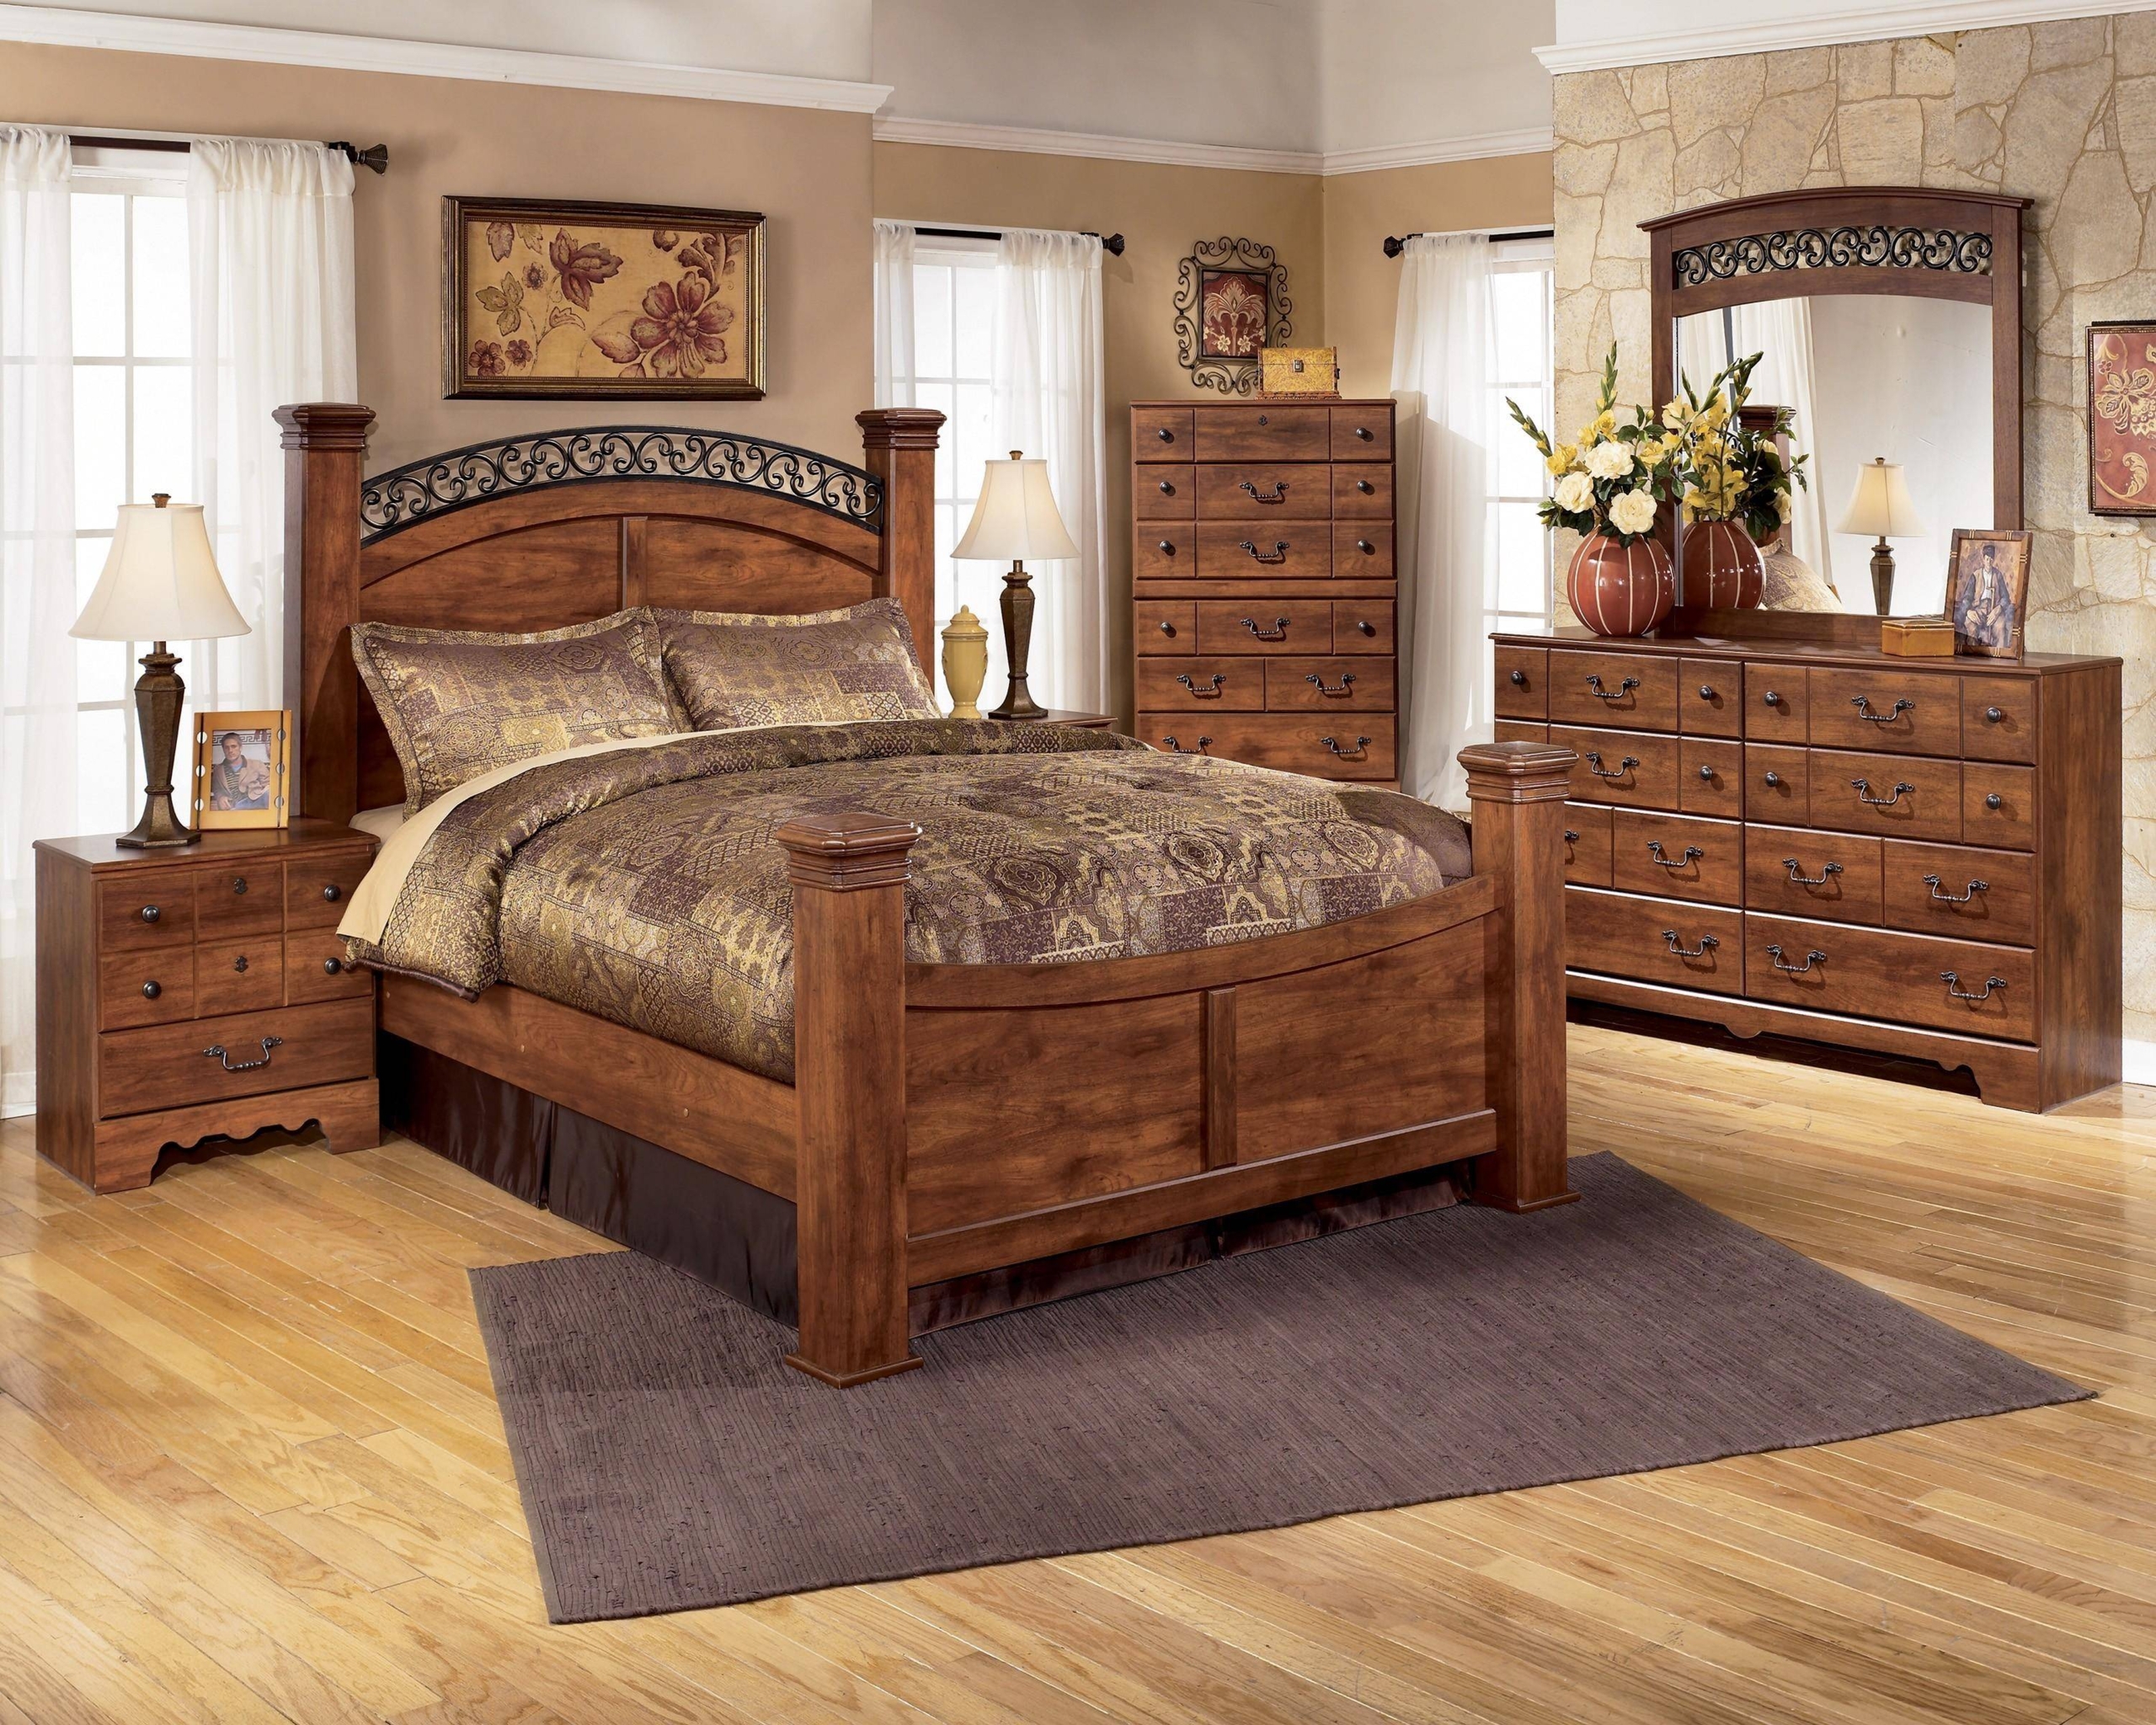 Metal and wood bedroom sets